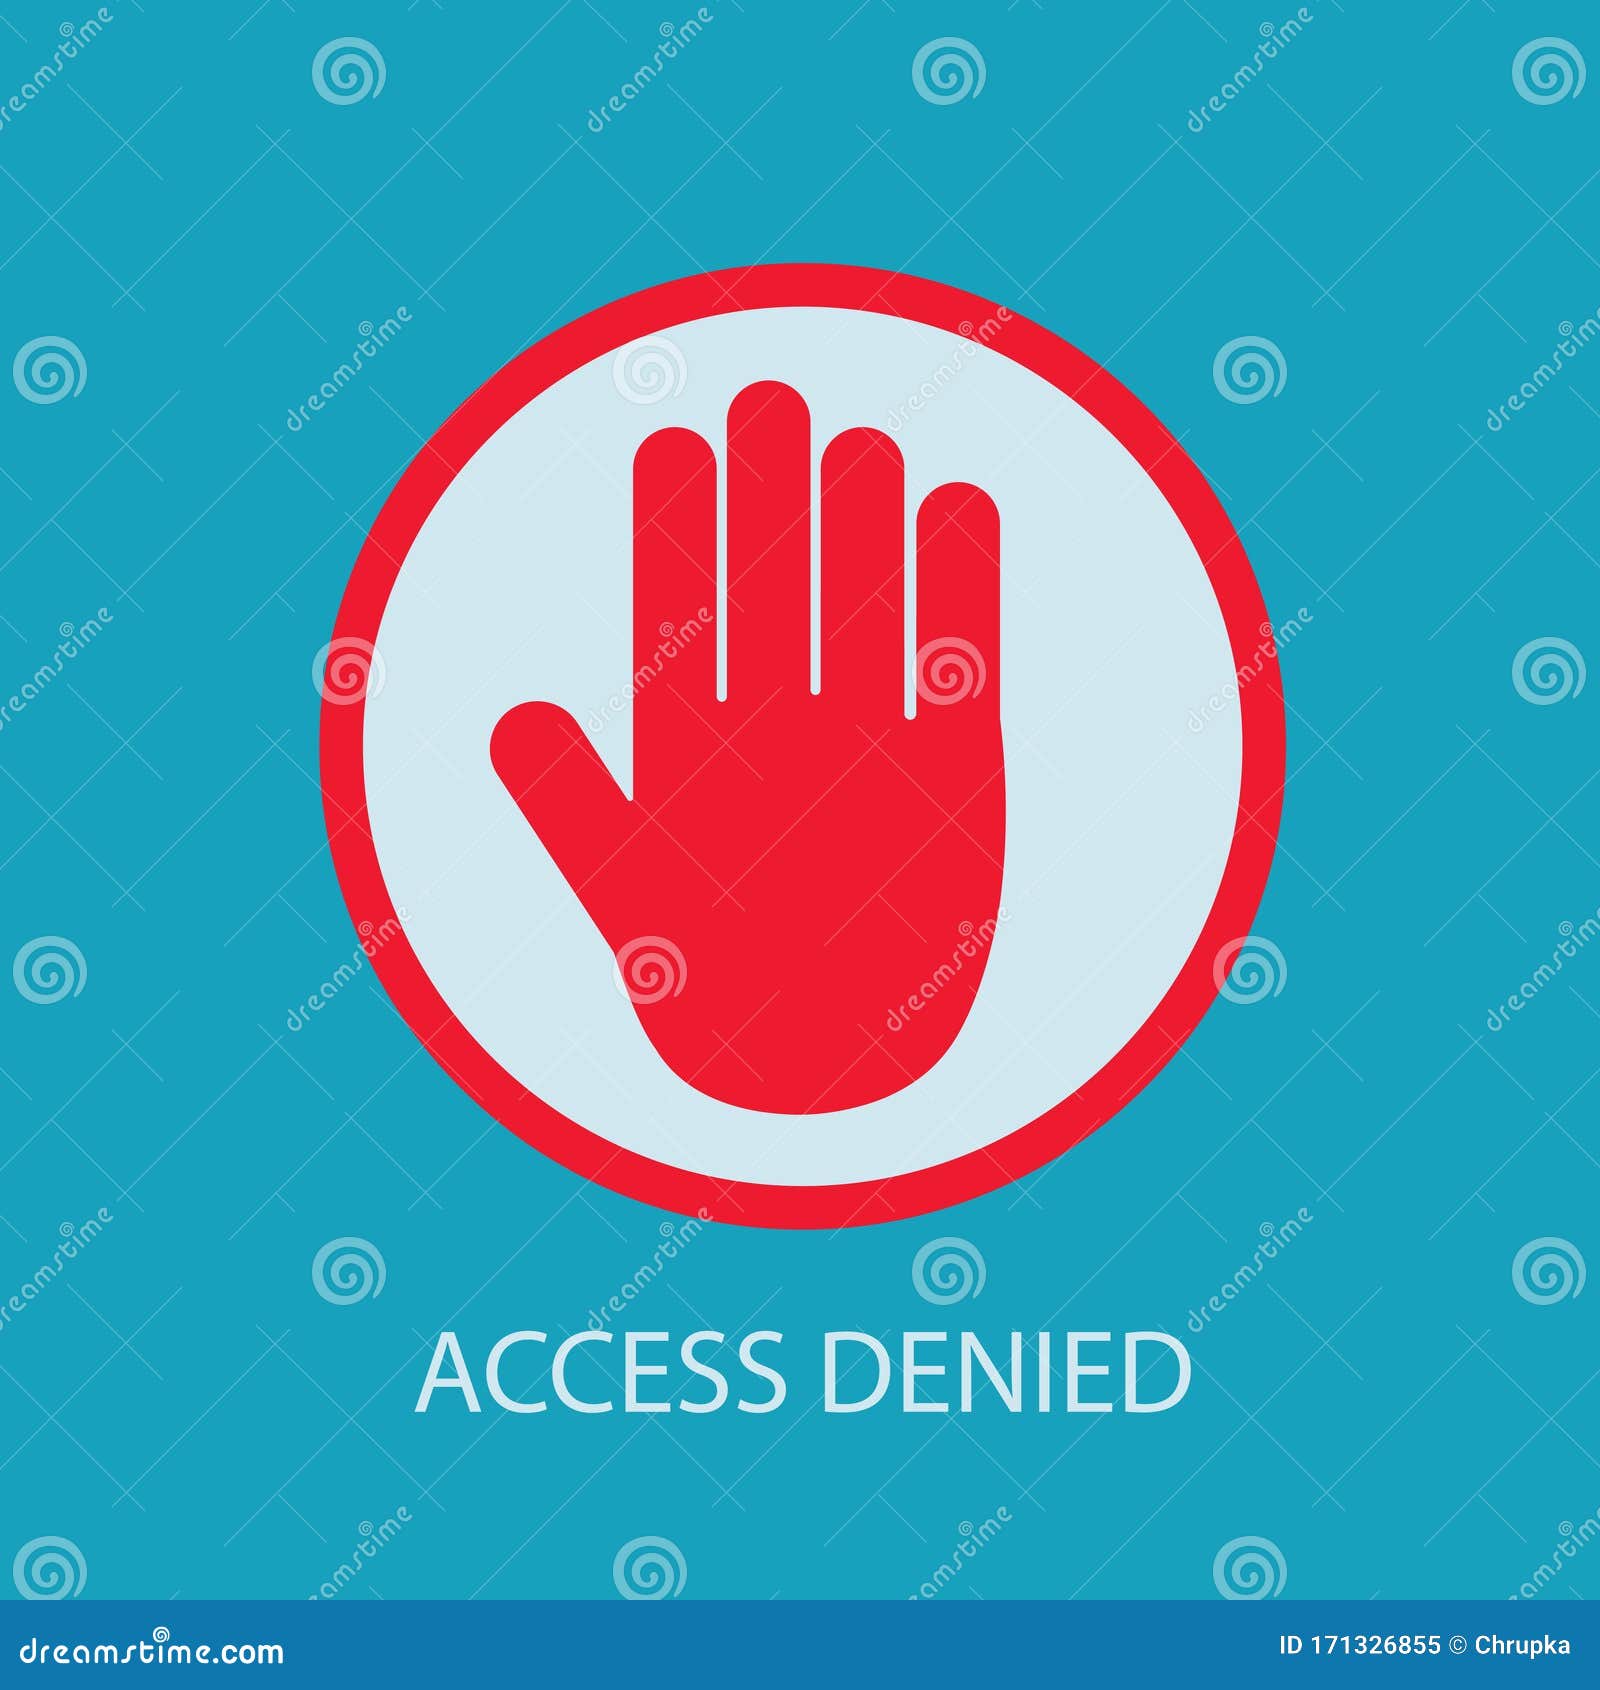 Access denied on steam фото 90